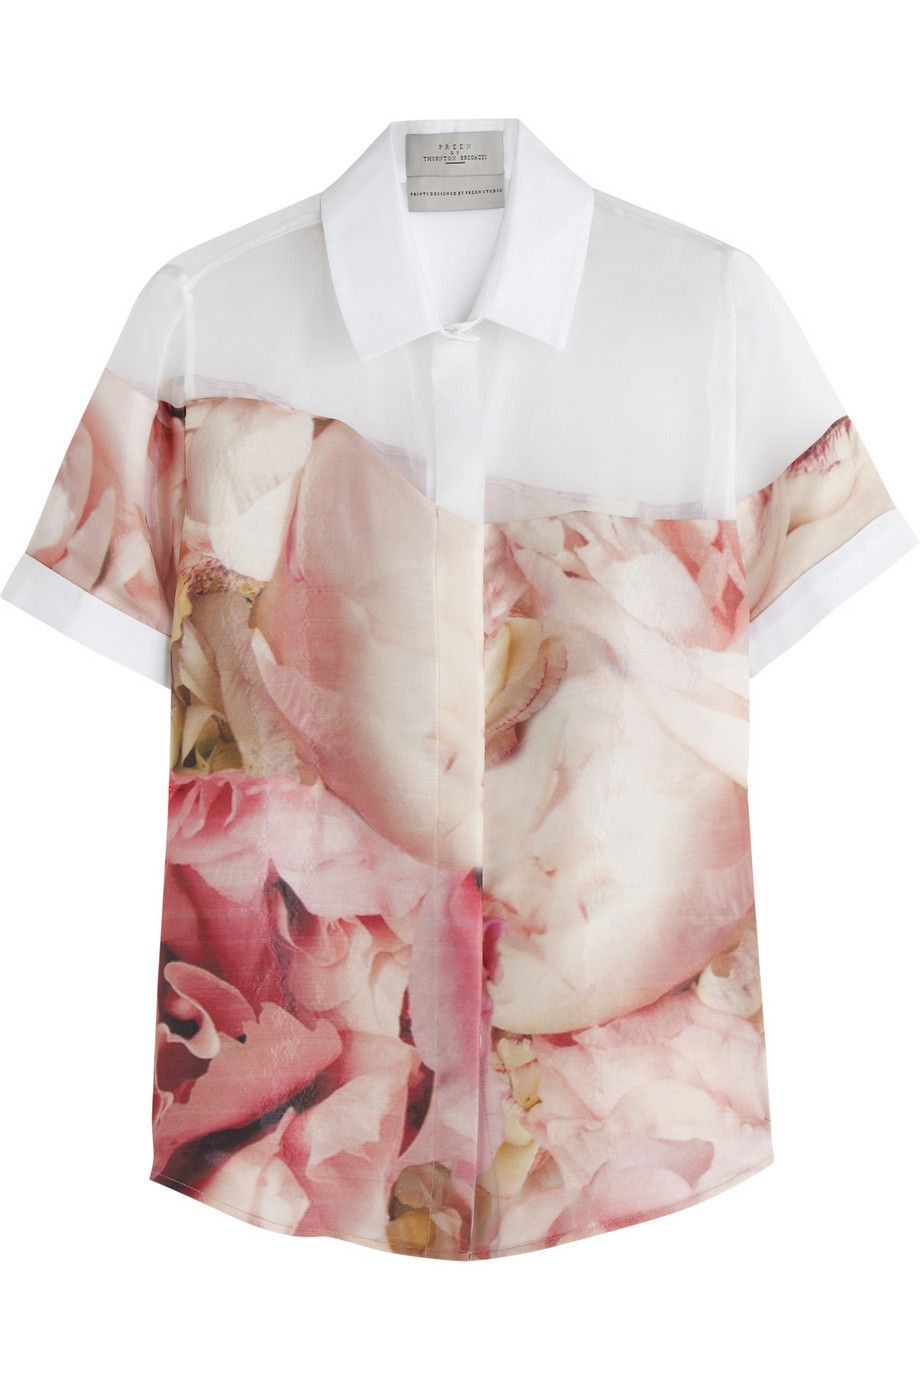 Product, Collar, Dress shirt, Sleeve, Shirt, White, Pink, Pattern, Baby & toddler clothing, Peach, 